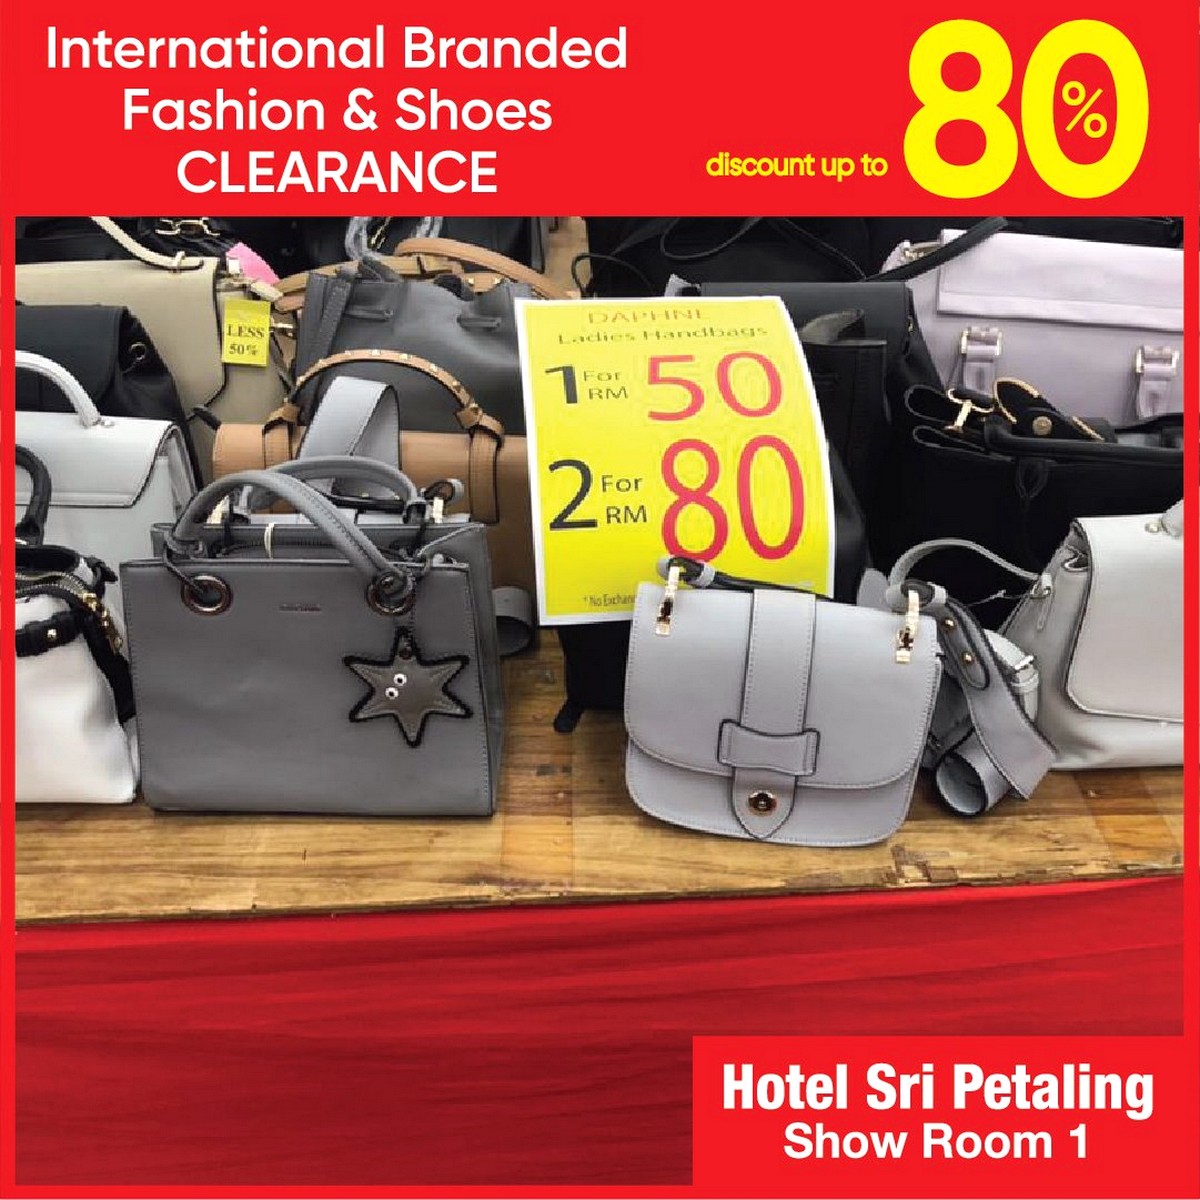 Hotel-Sri-Petaling-Warehouse-Sale-2021-5 - Apparels Fashion Accessories Fashion Lifestyle & Department Store Kuala Lumpur Selangor Warehouse Sale & Clearance in Malaysia 